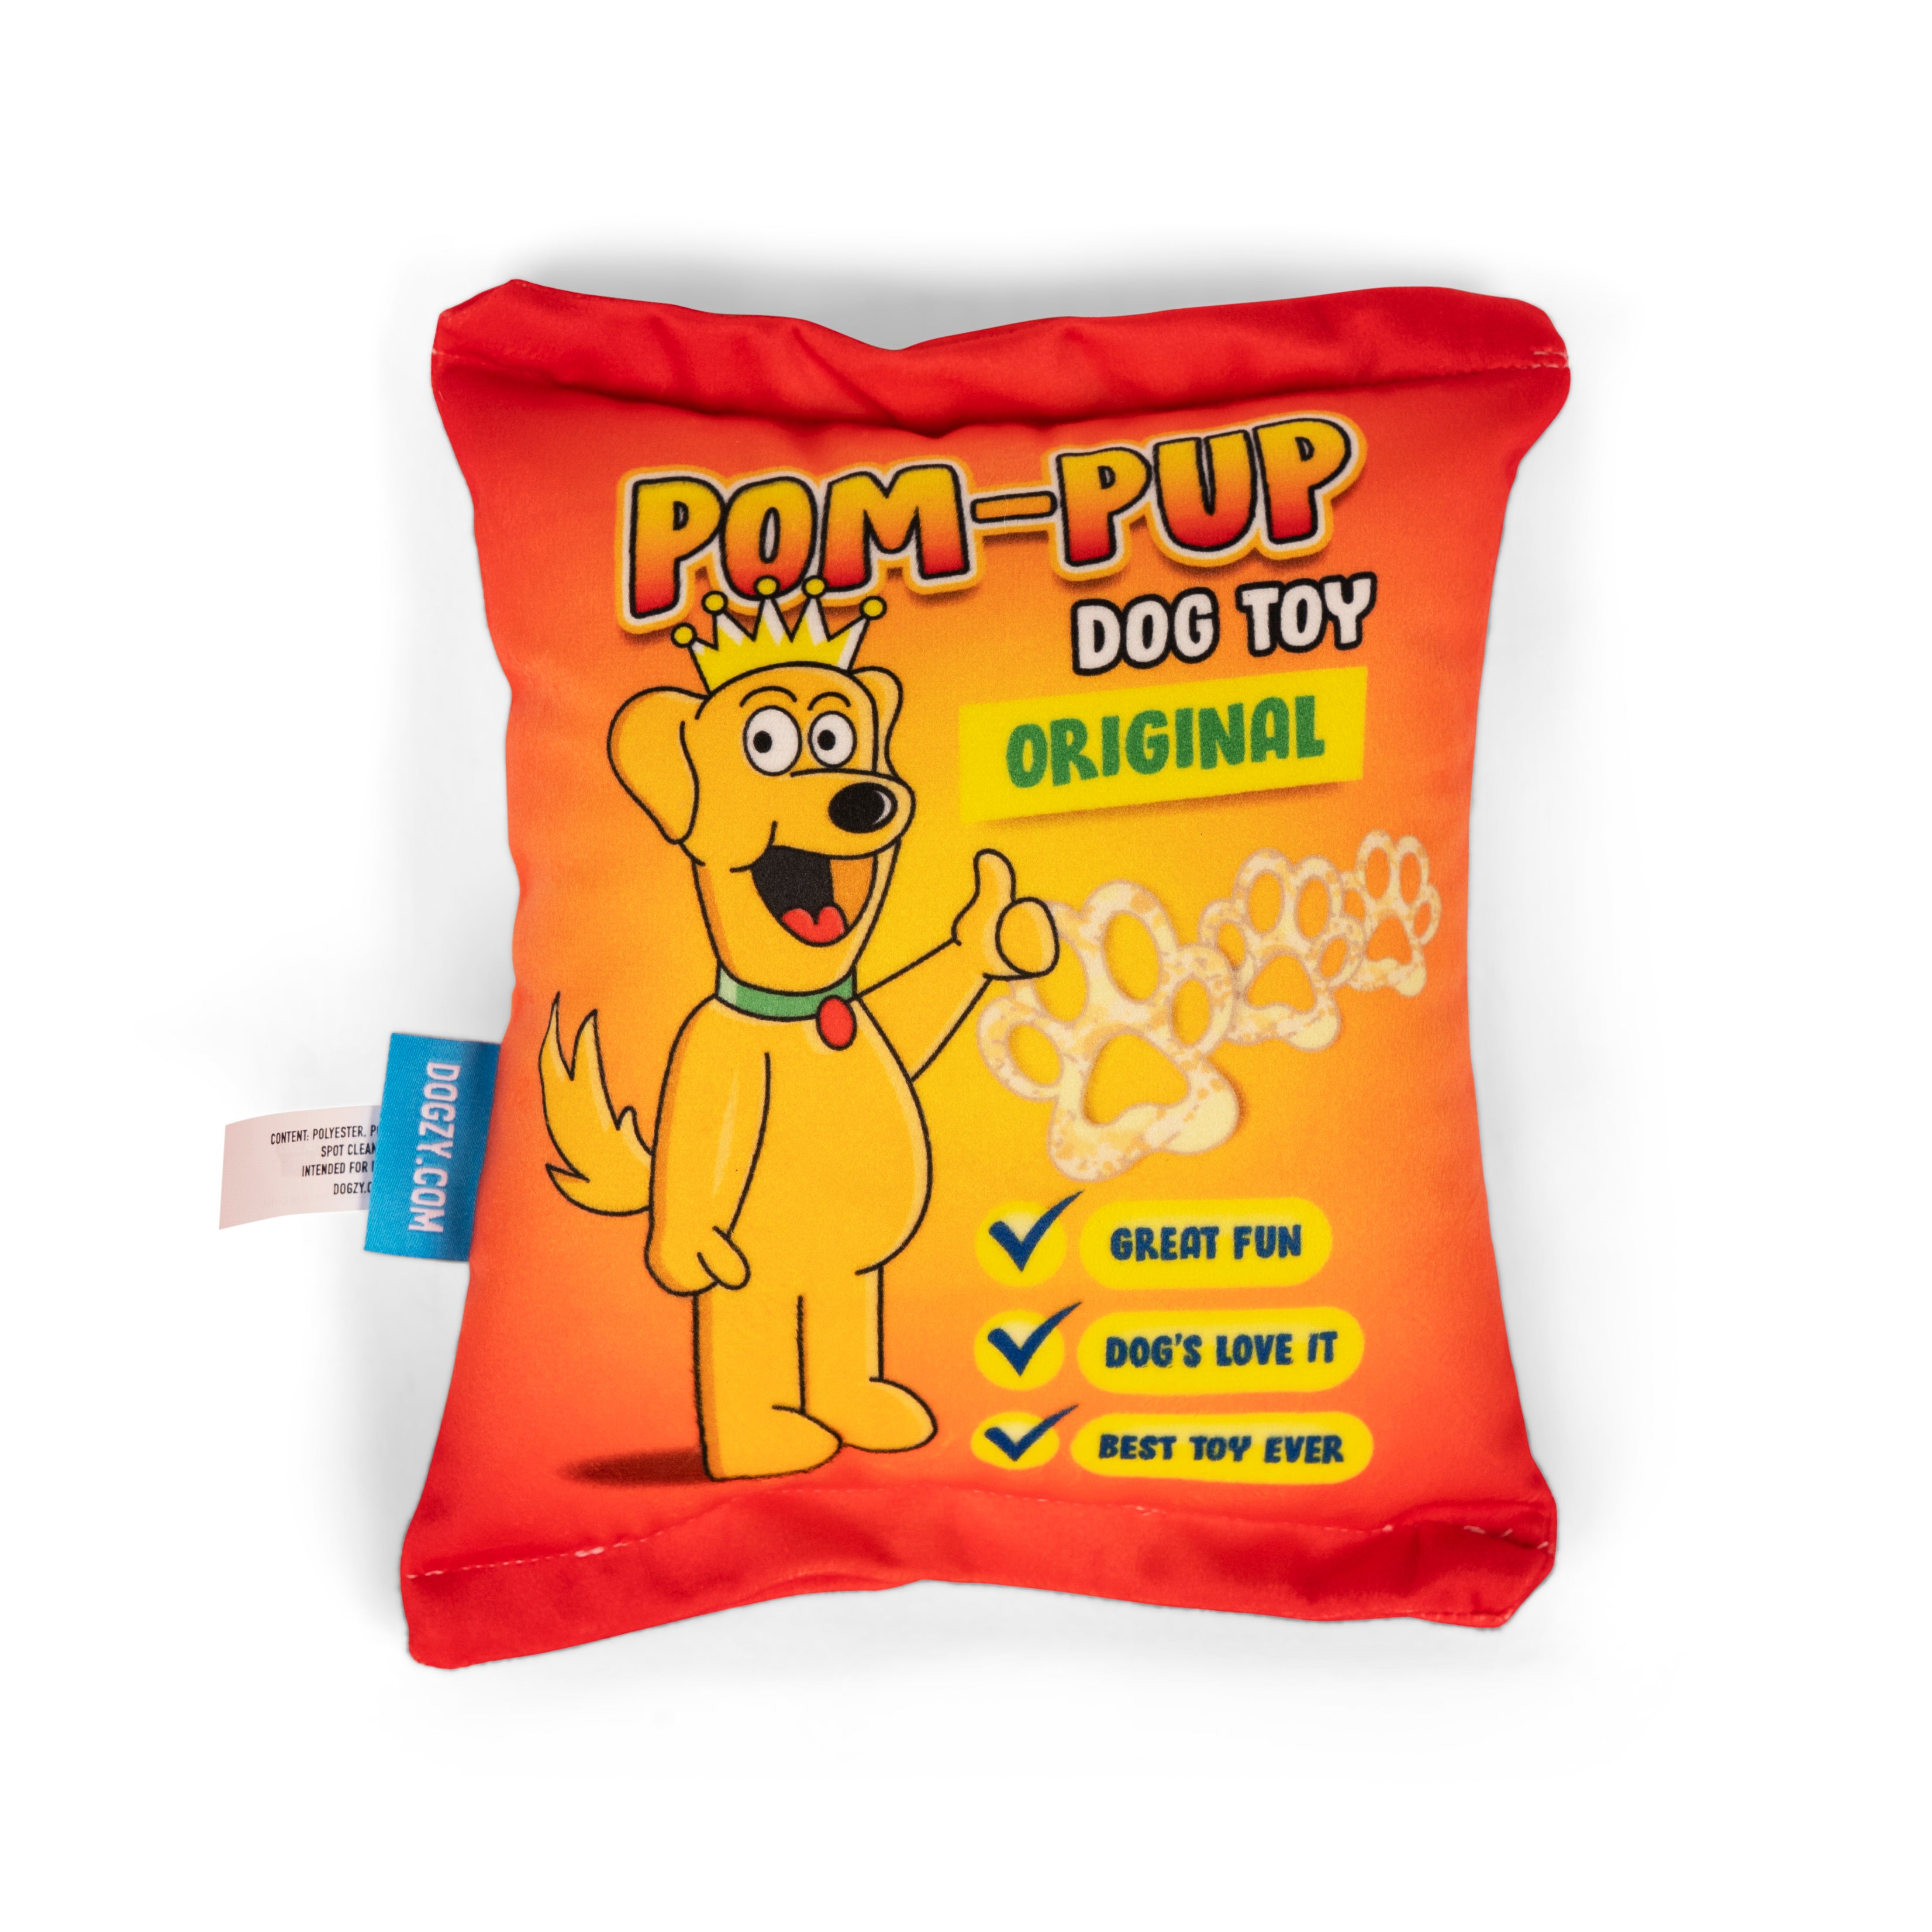 Pom Pup soft Dog Toy